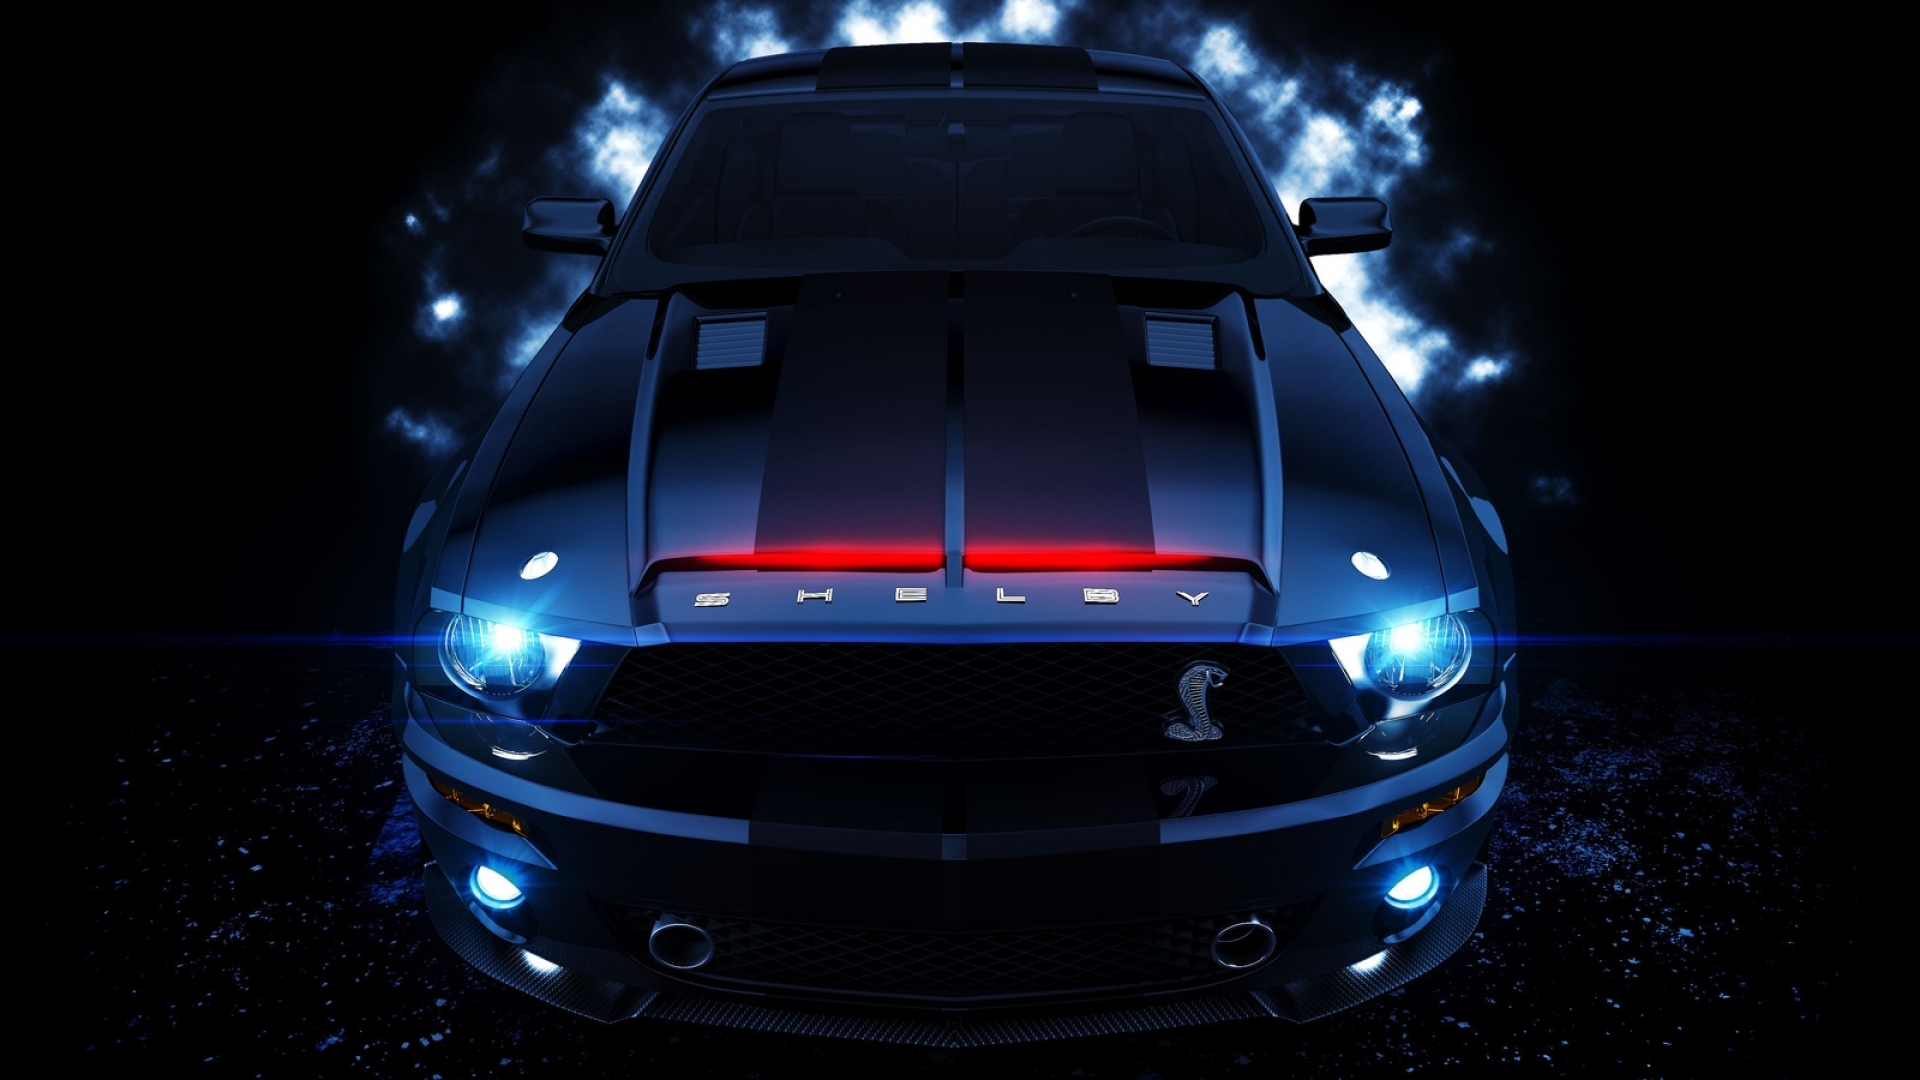 Laden Sie Ford Mustang Shelby Gt500 HD-Desktop-Hintergründe herunter